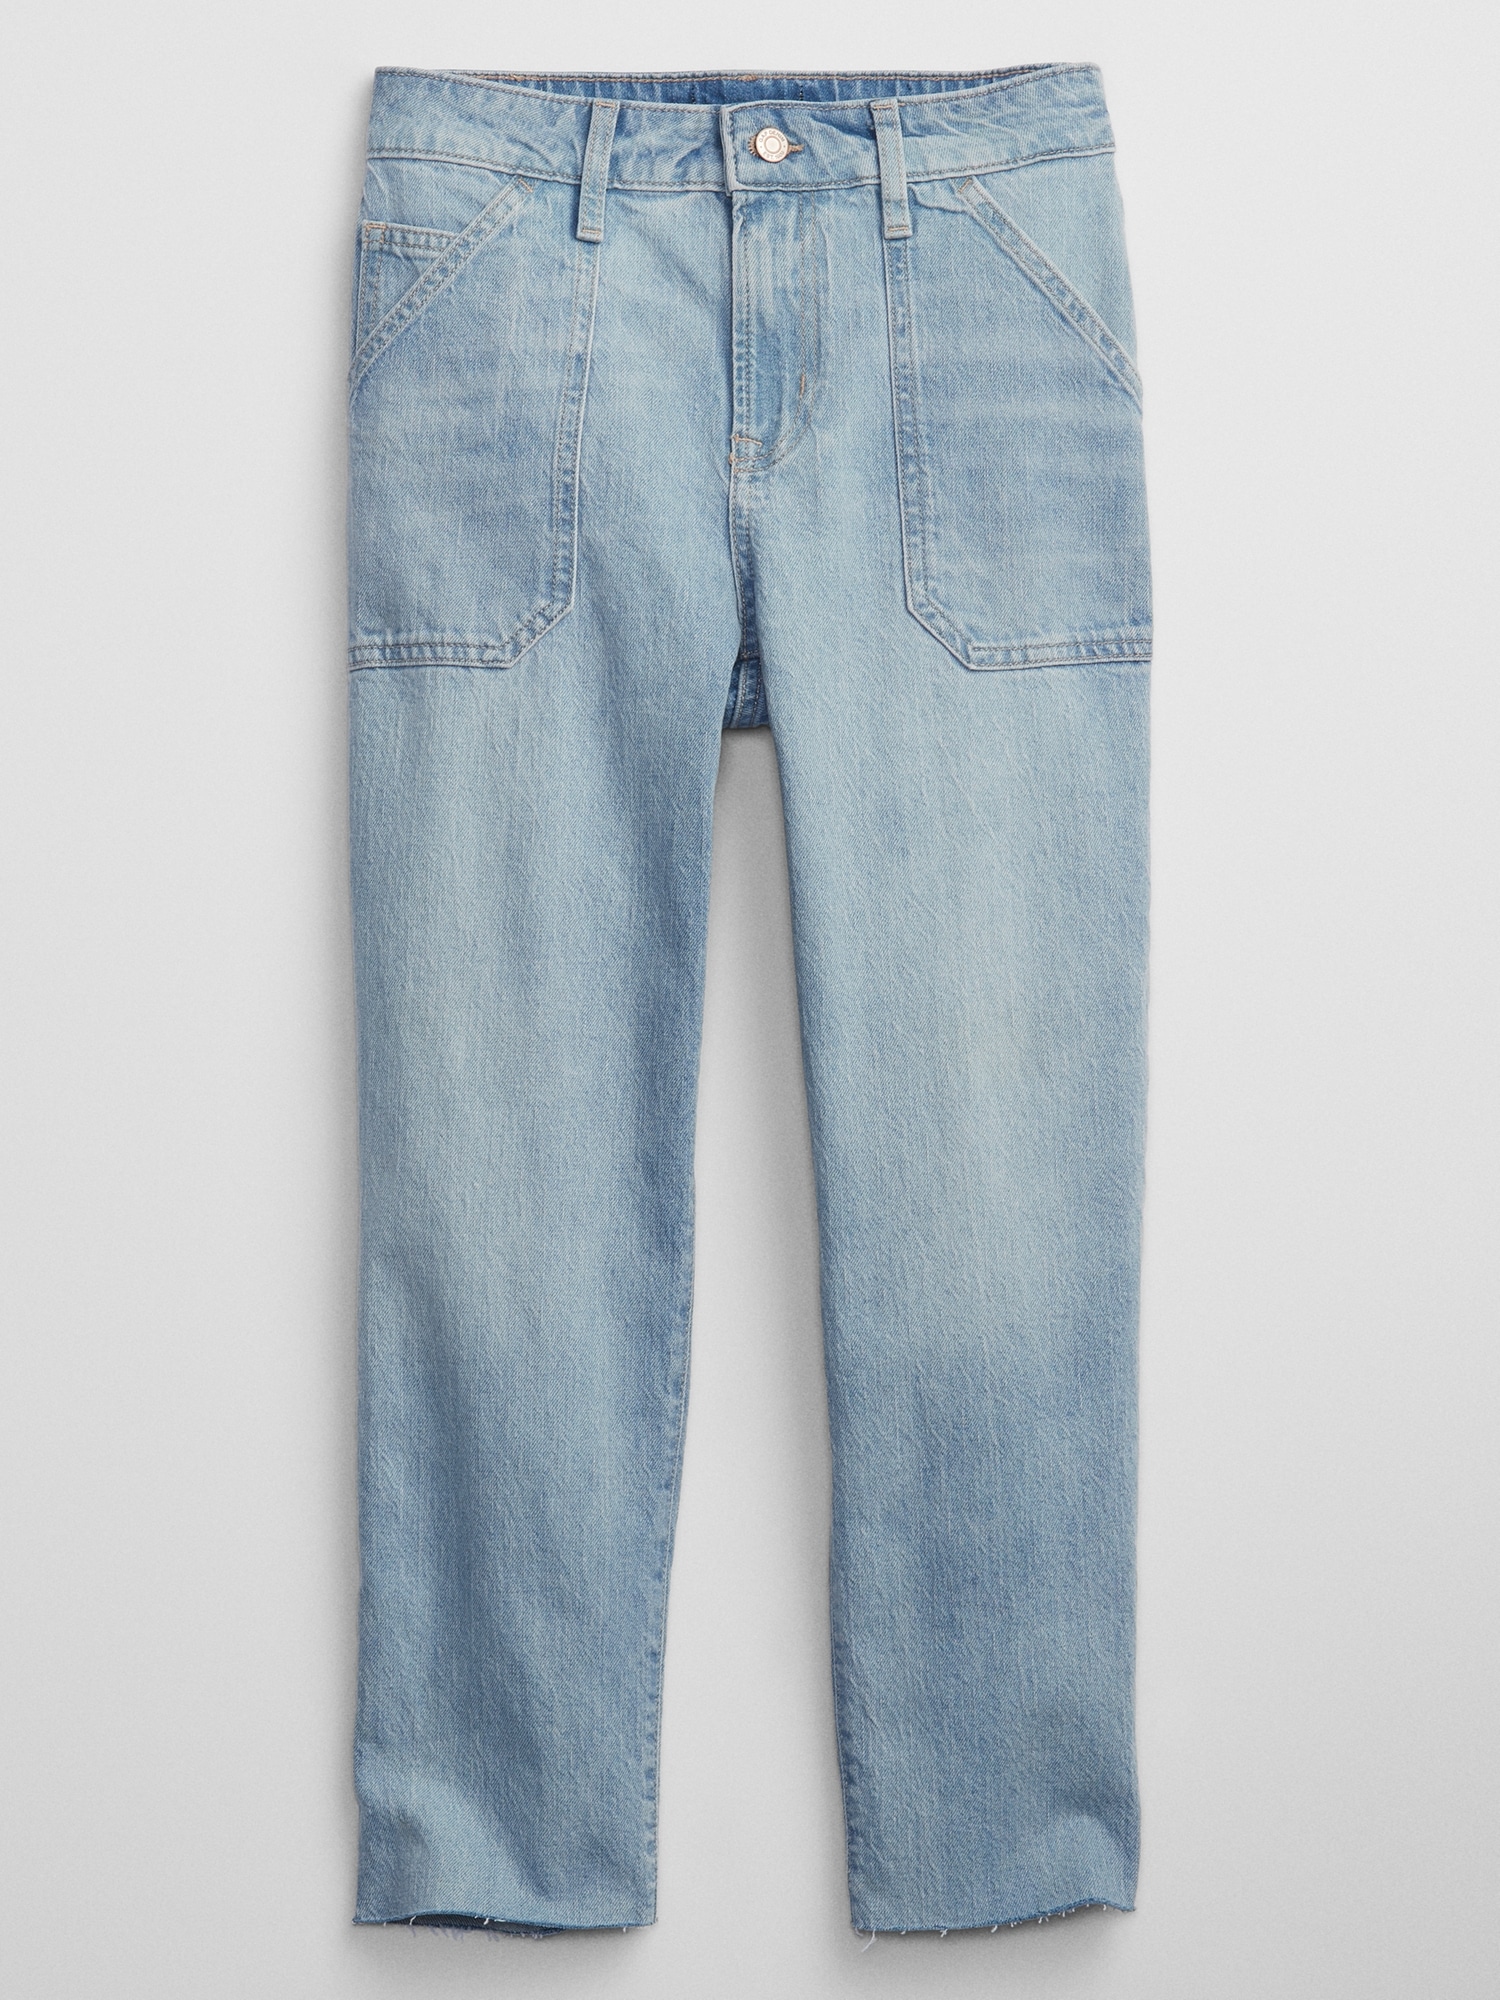 Mid Rise Utility Universal Slim Boyfriend Jeans with Washwell | Gap Factory